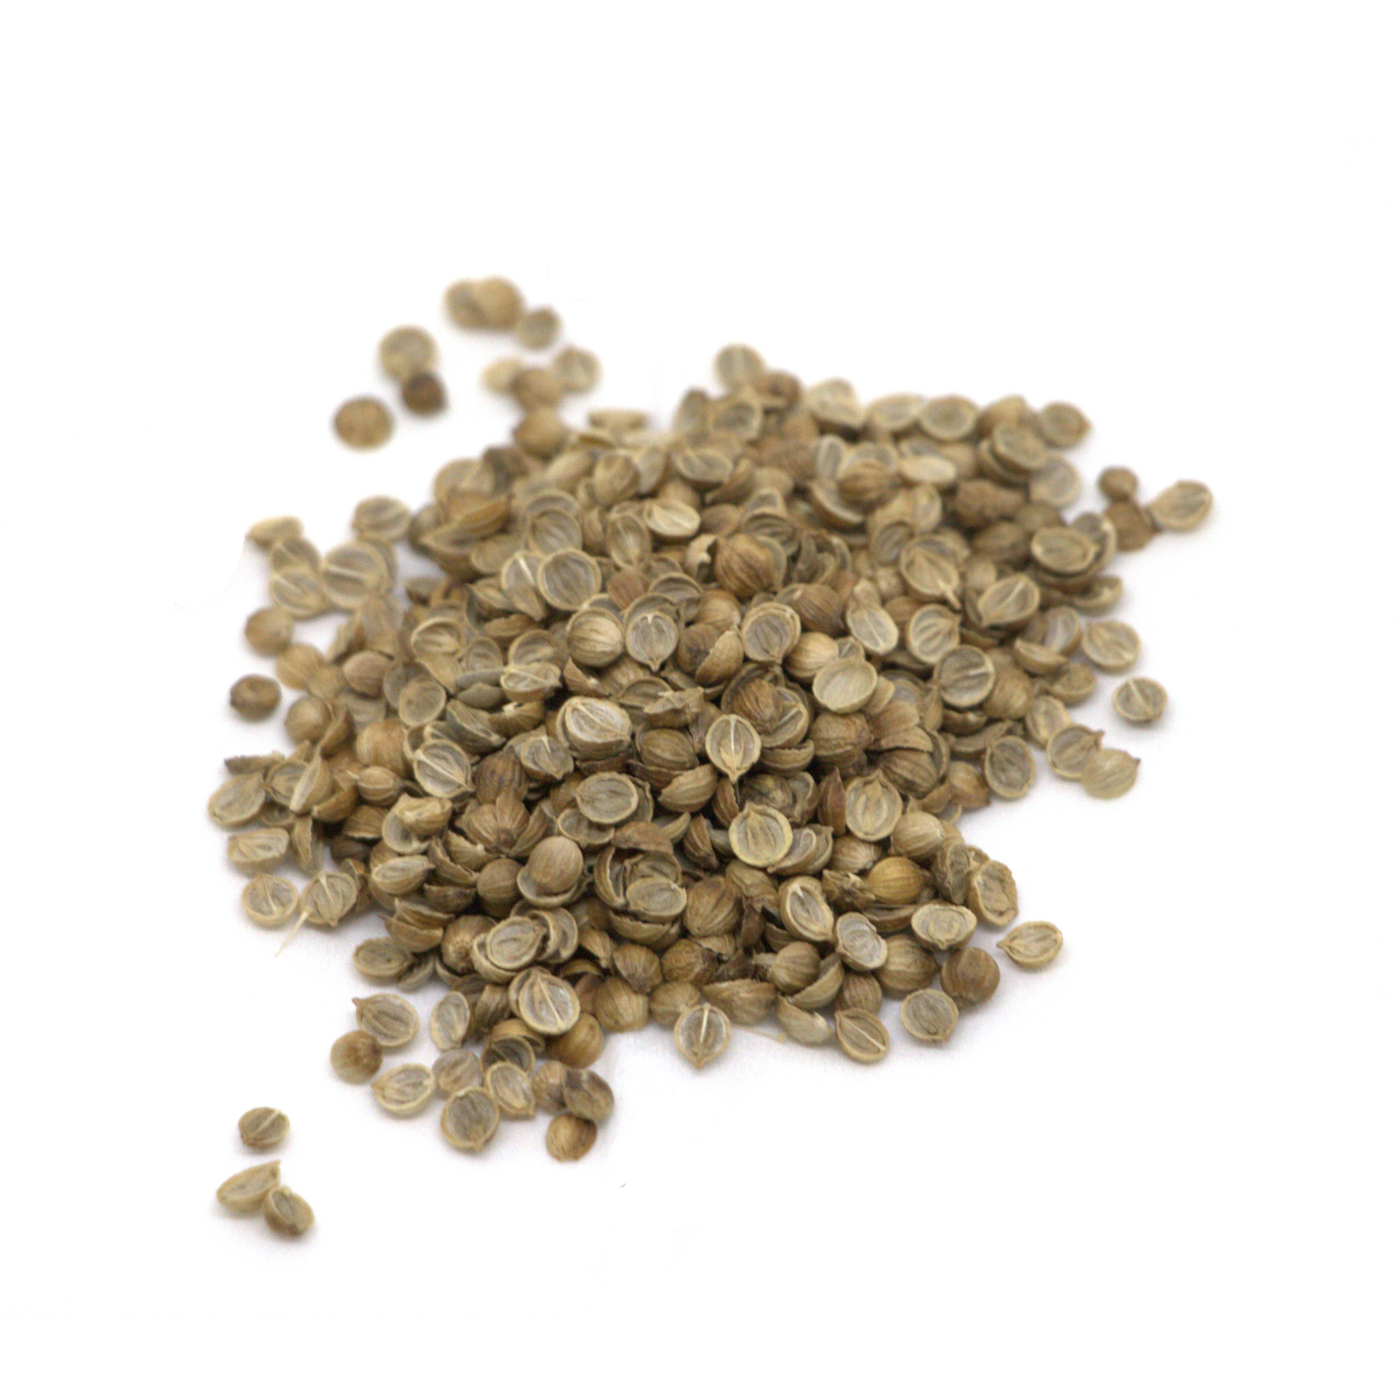 Organic seeds of split coriander